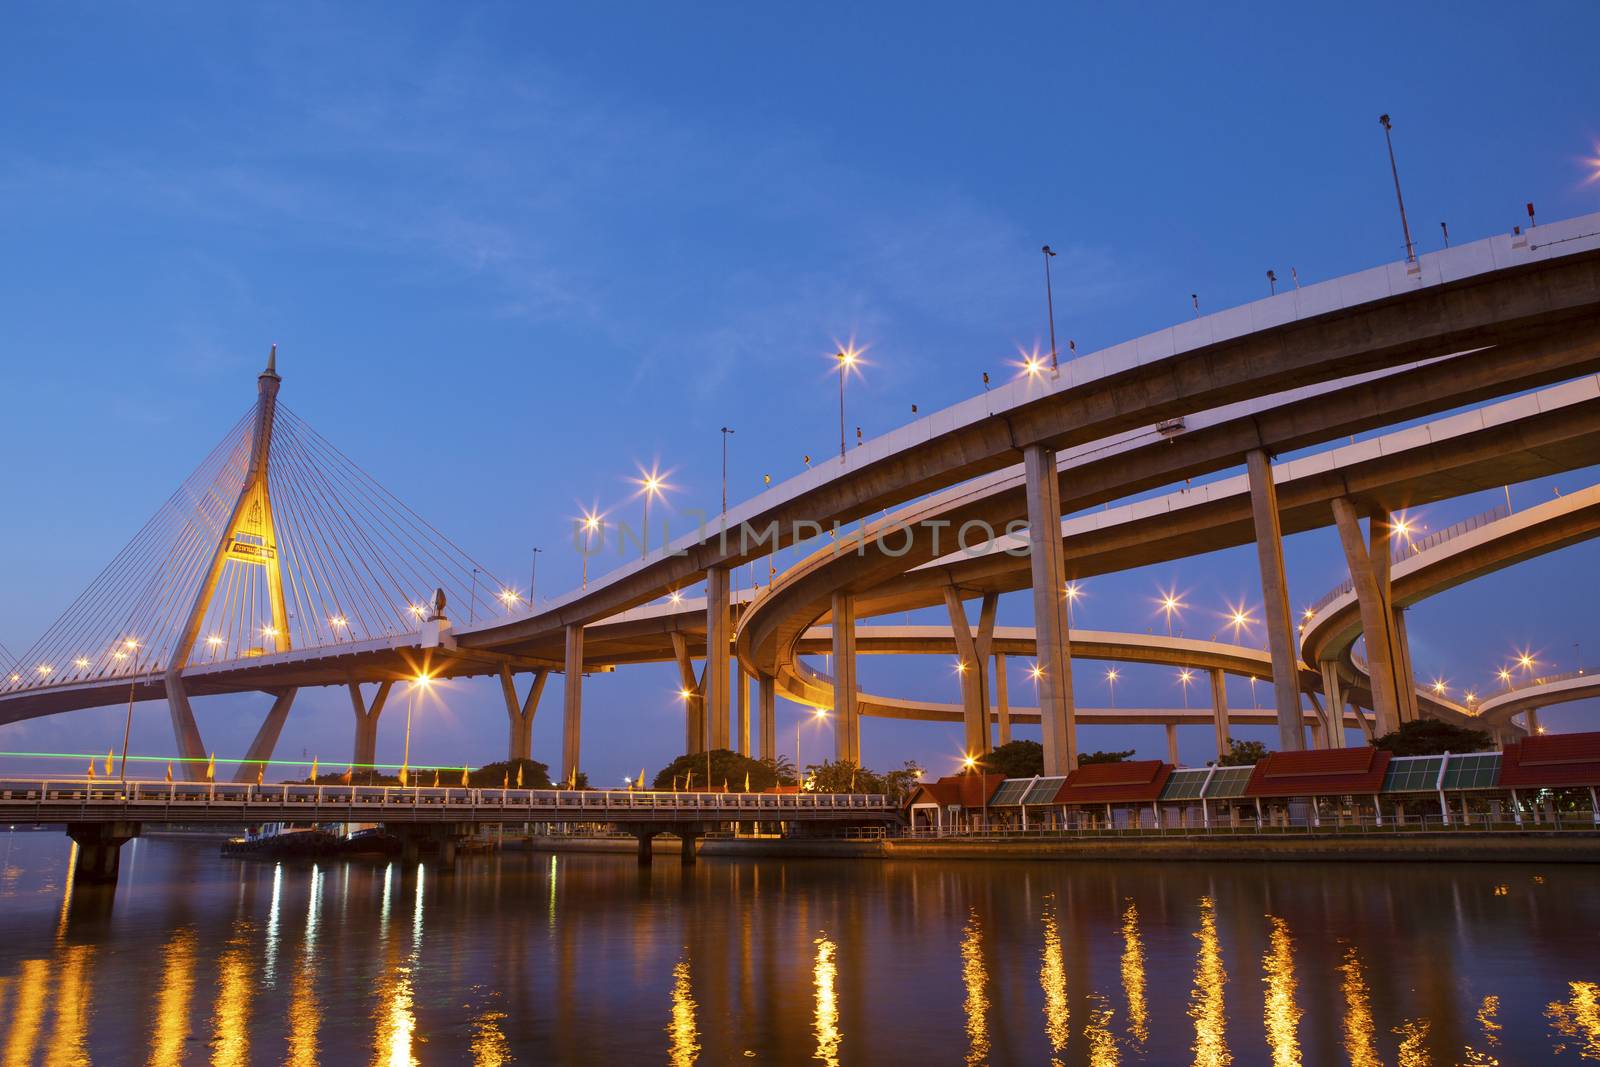 moring light of bhumiphol bridge important landamark and land transportation in bangkok thailand capital